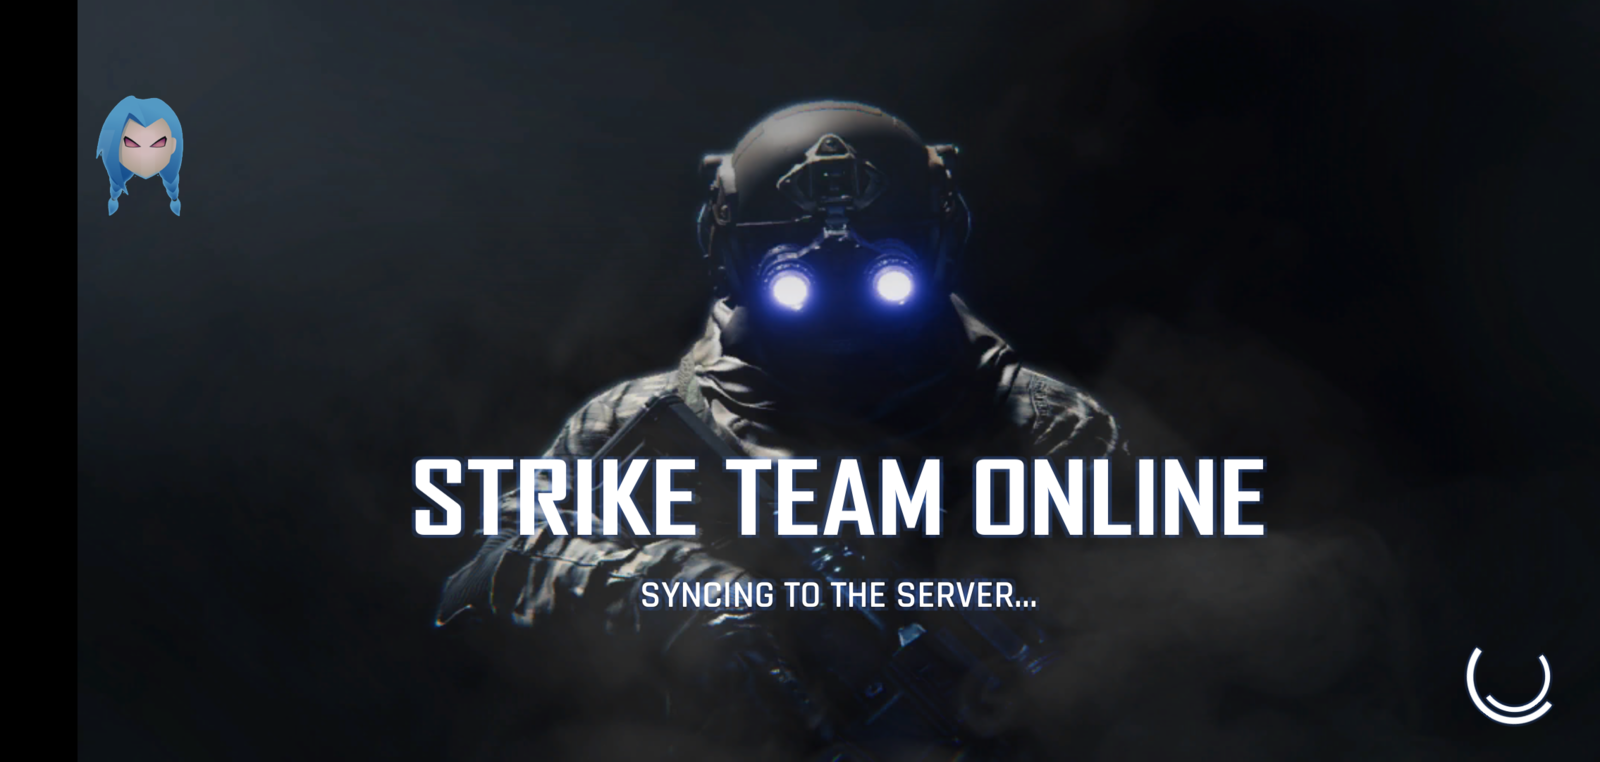 Strike Team Online Ver. 0.5b20 MOD MENU APK, Godmode, One Shot Kill